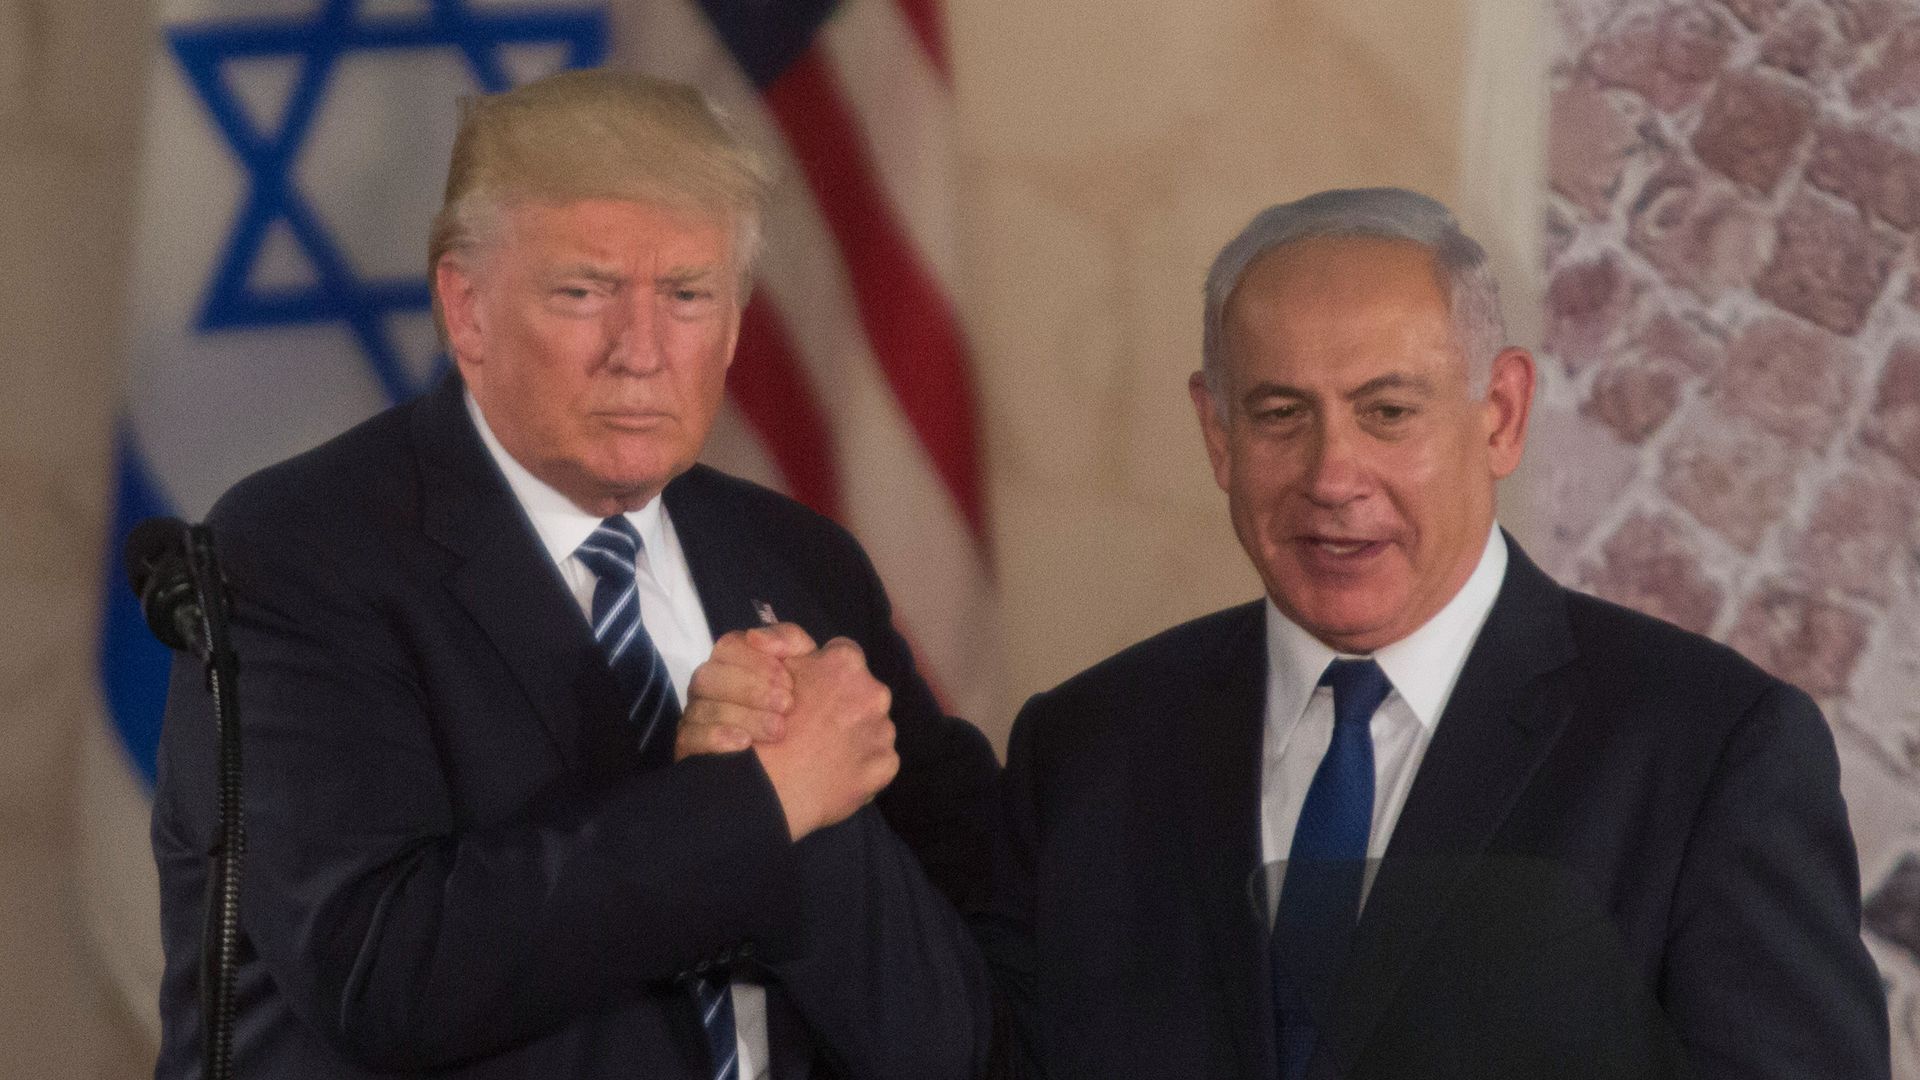 Trump shakes hands with Netanyahu